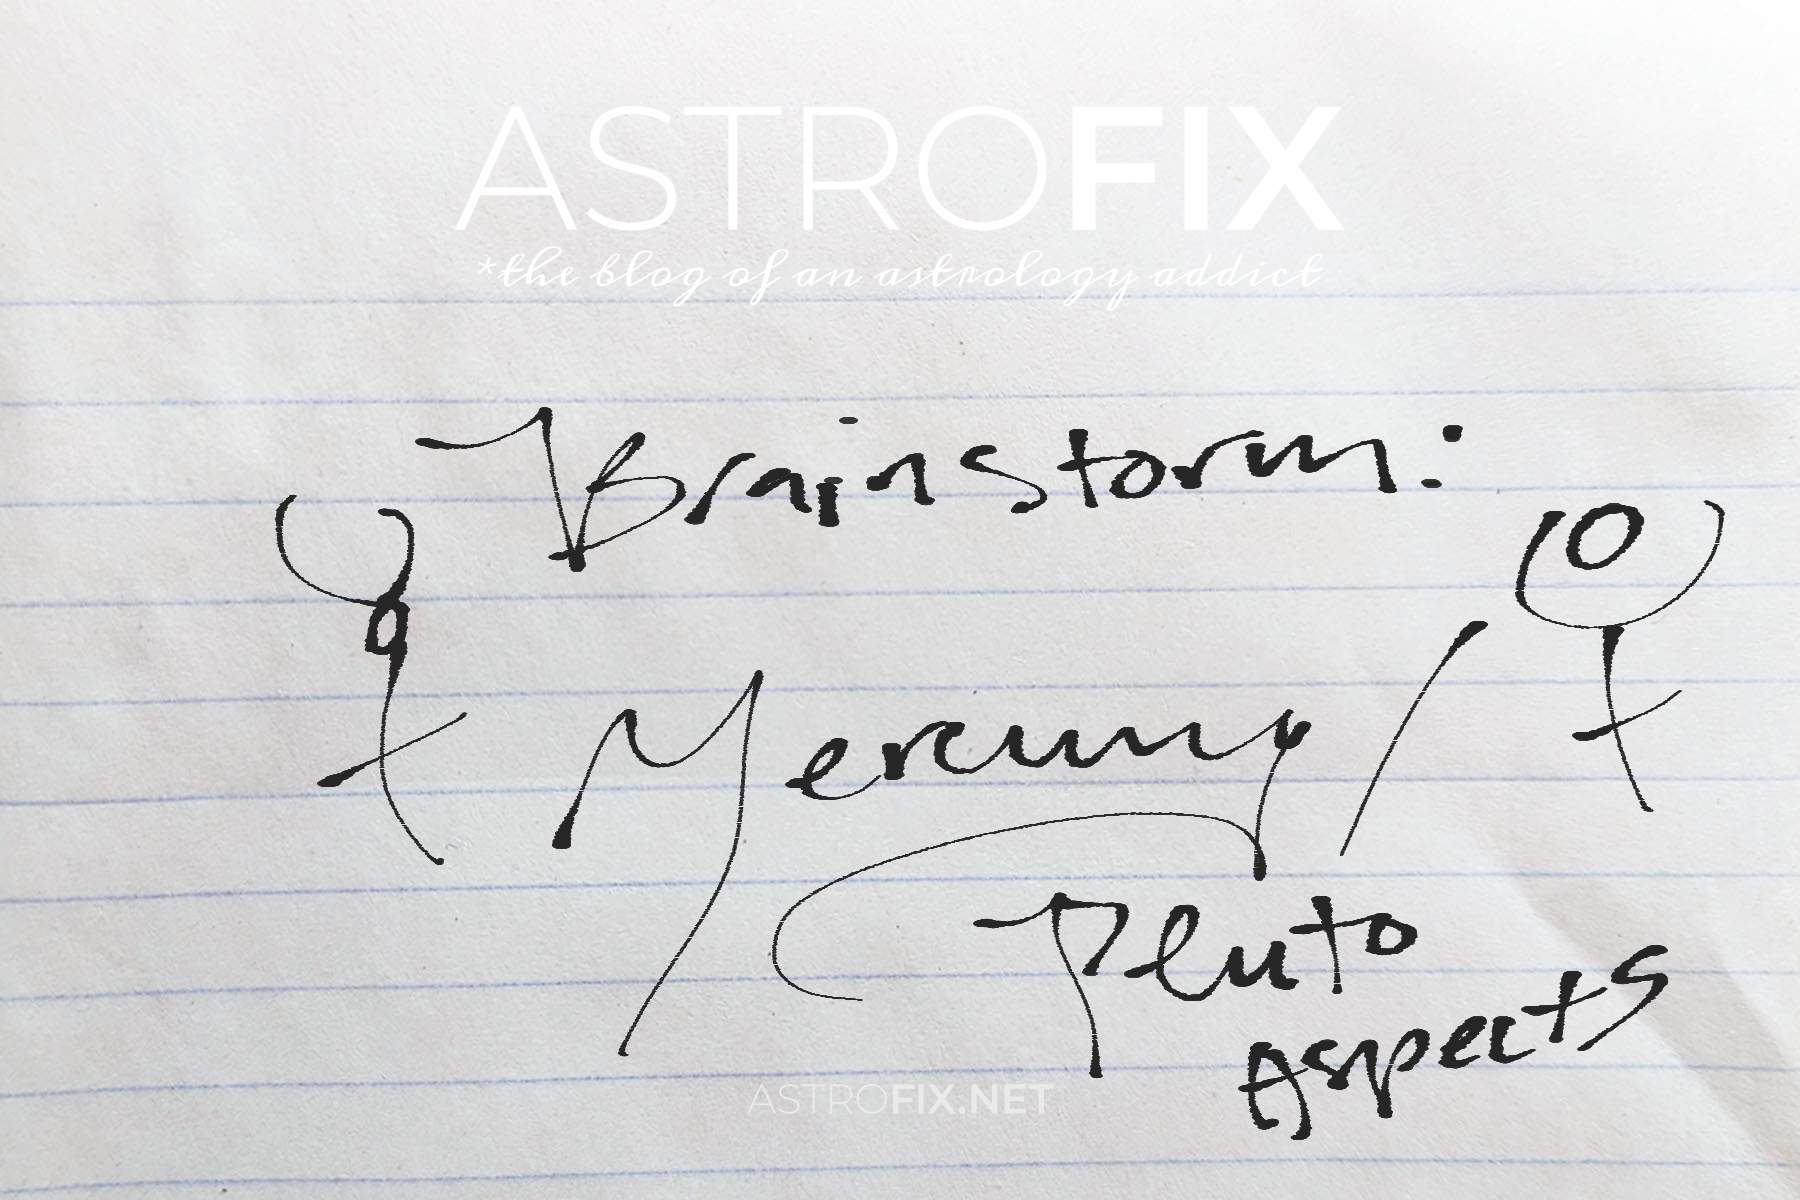 brainstorm-mercury-pluto-astrology-aspects